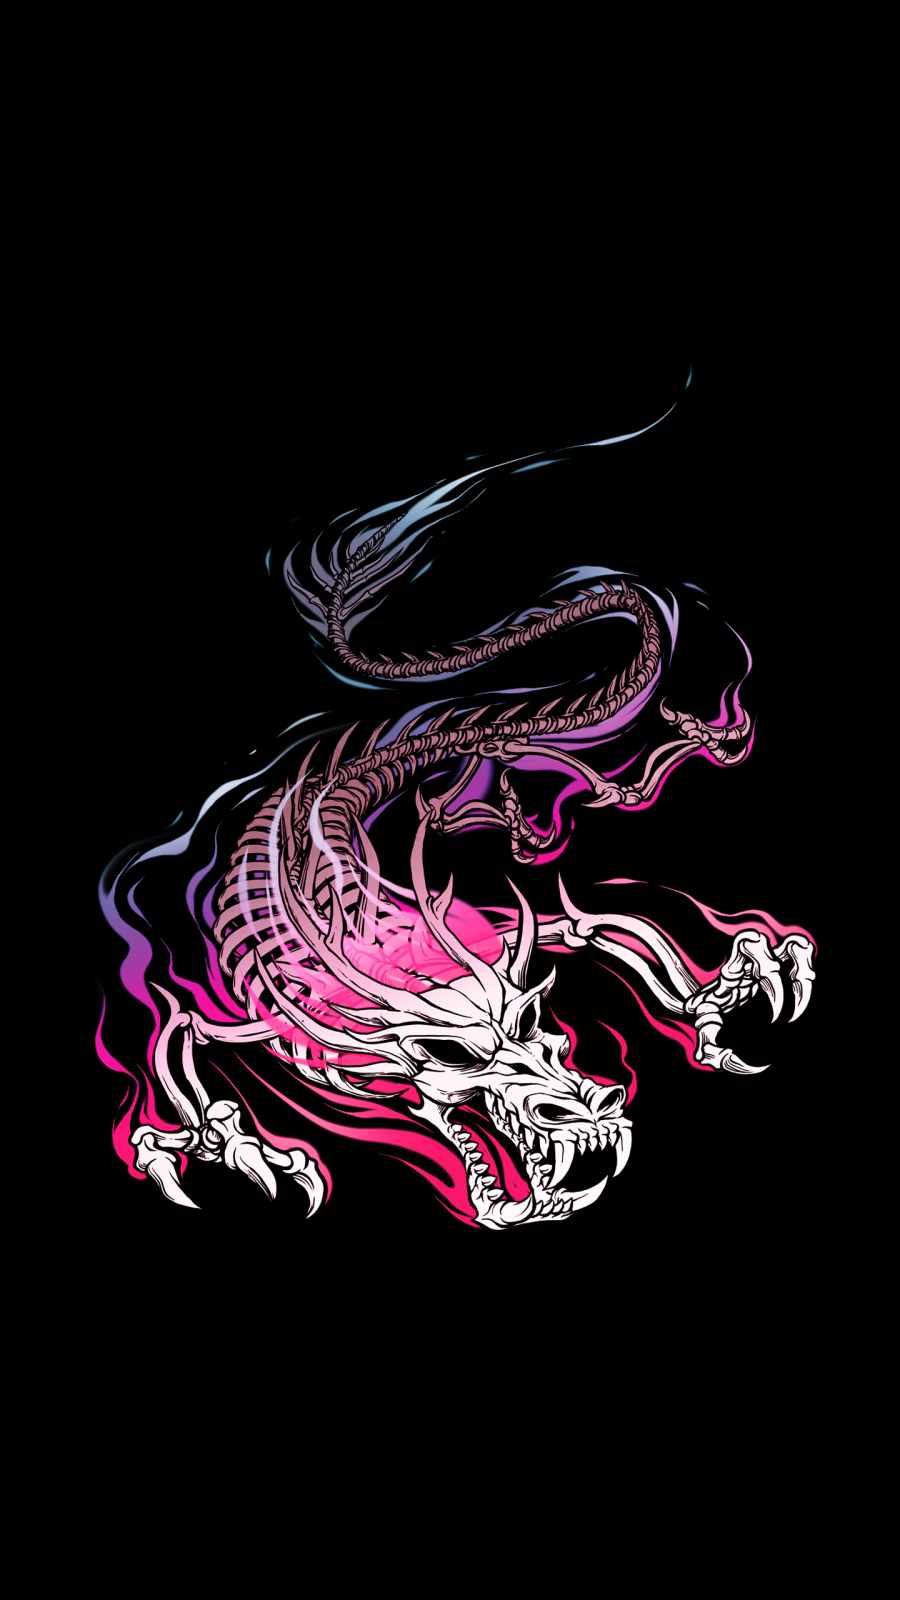 Chinese Skull Dragon IPhone Wallpaper Wallpaper, iPhone Wallpaper